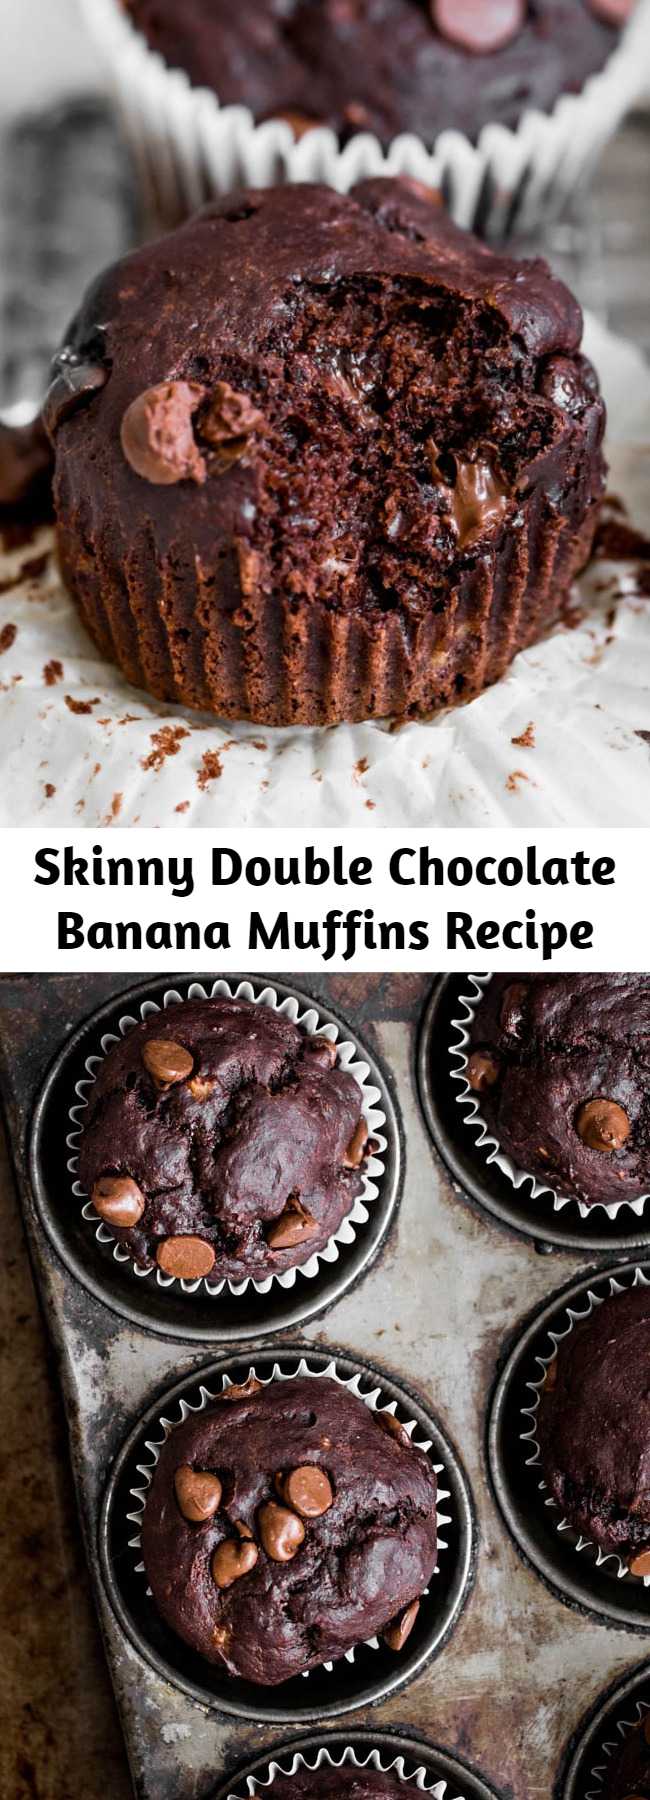 Skinny Double Chocolate Banana Muffins Recipe - Healthy double chocolate banana muffins made with whole grains and greek yogurt. No added sugar so you can feel good having chocolate for breakfast!